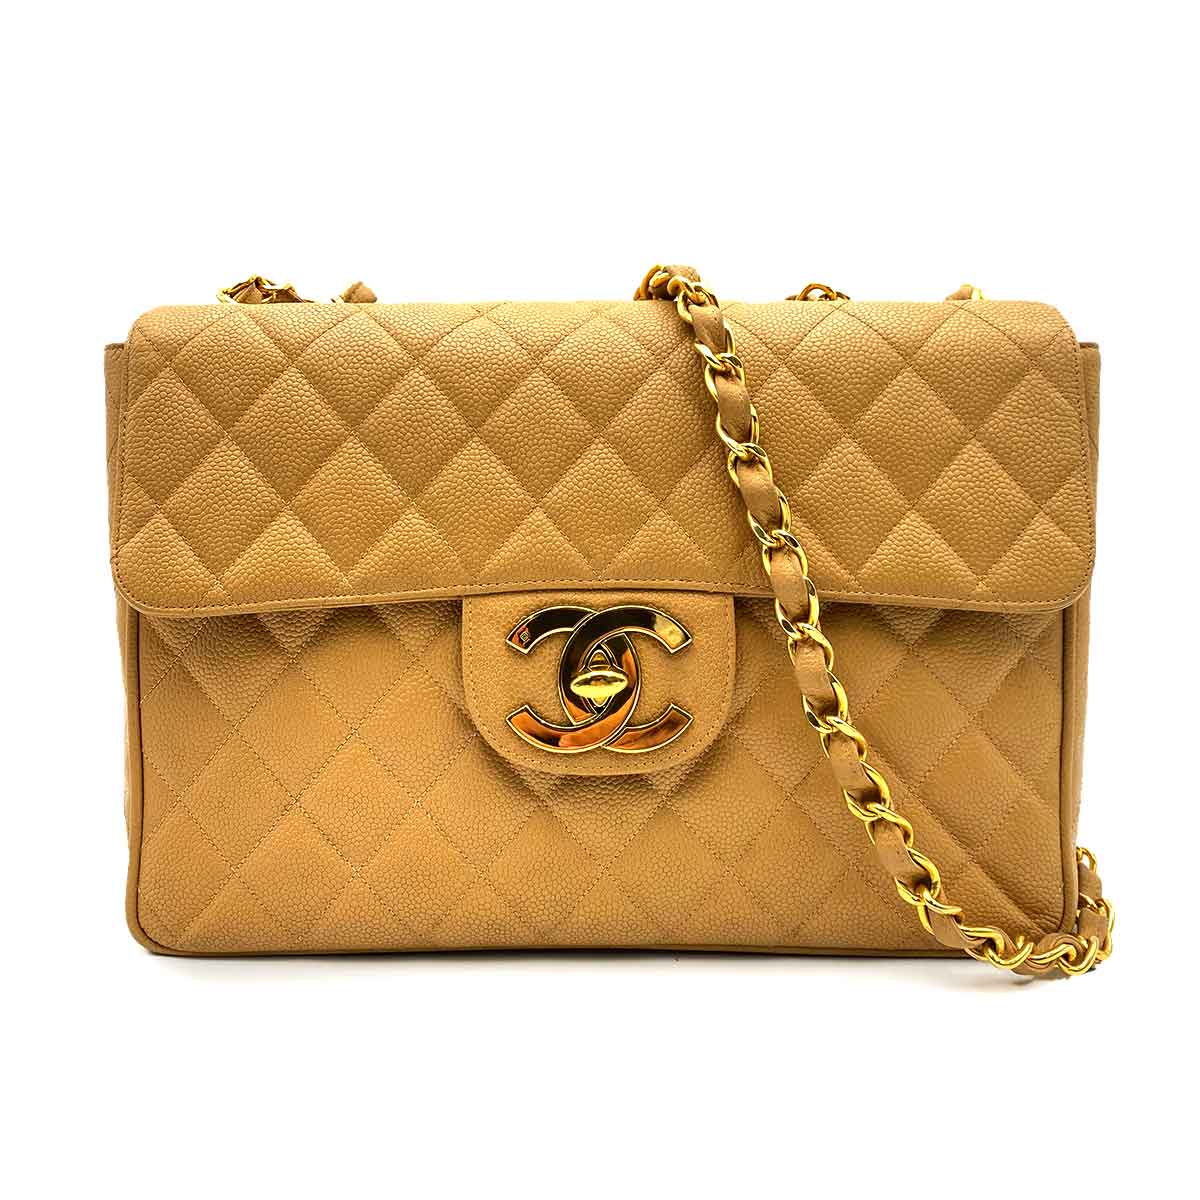 Chanel CHANEL VINTAGE JUMBO MATELASSE 30 CHAIN SHOULDER BAG BEIGE CAVIAR SKIN 90226486